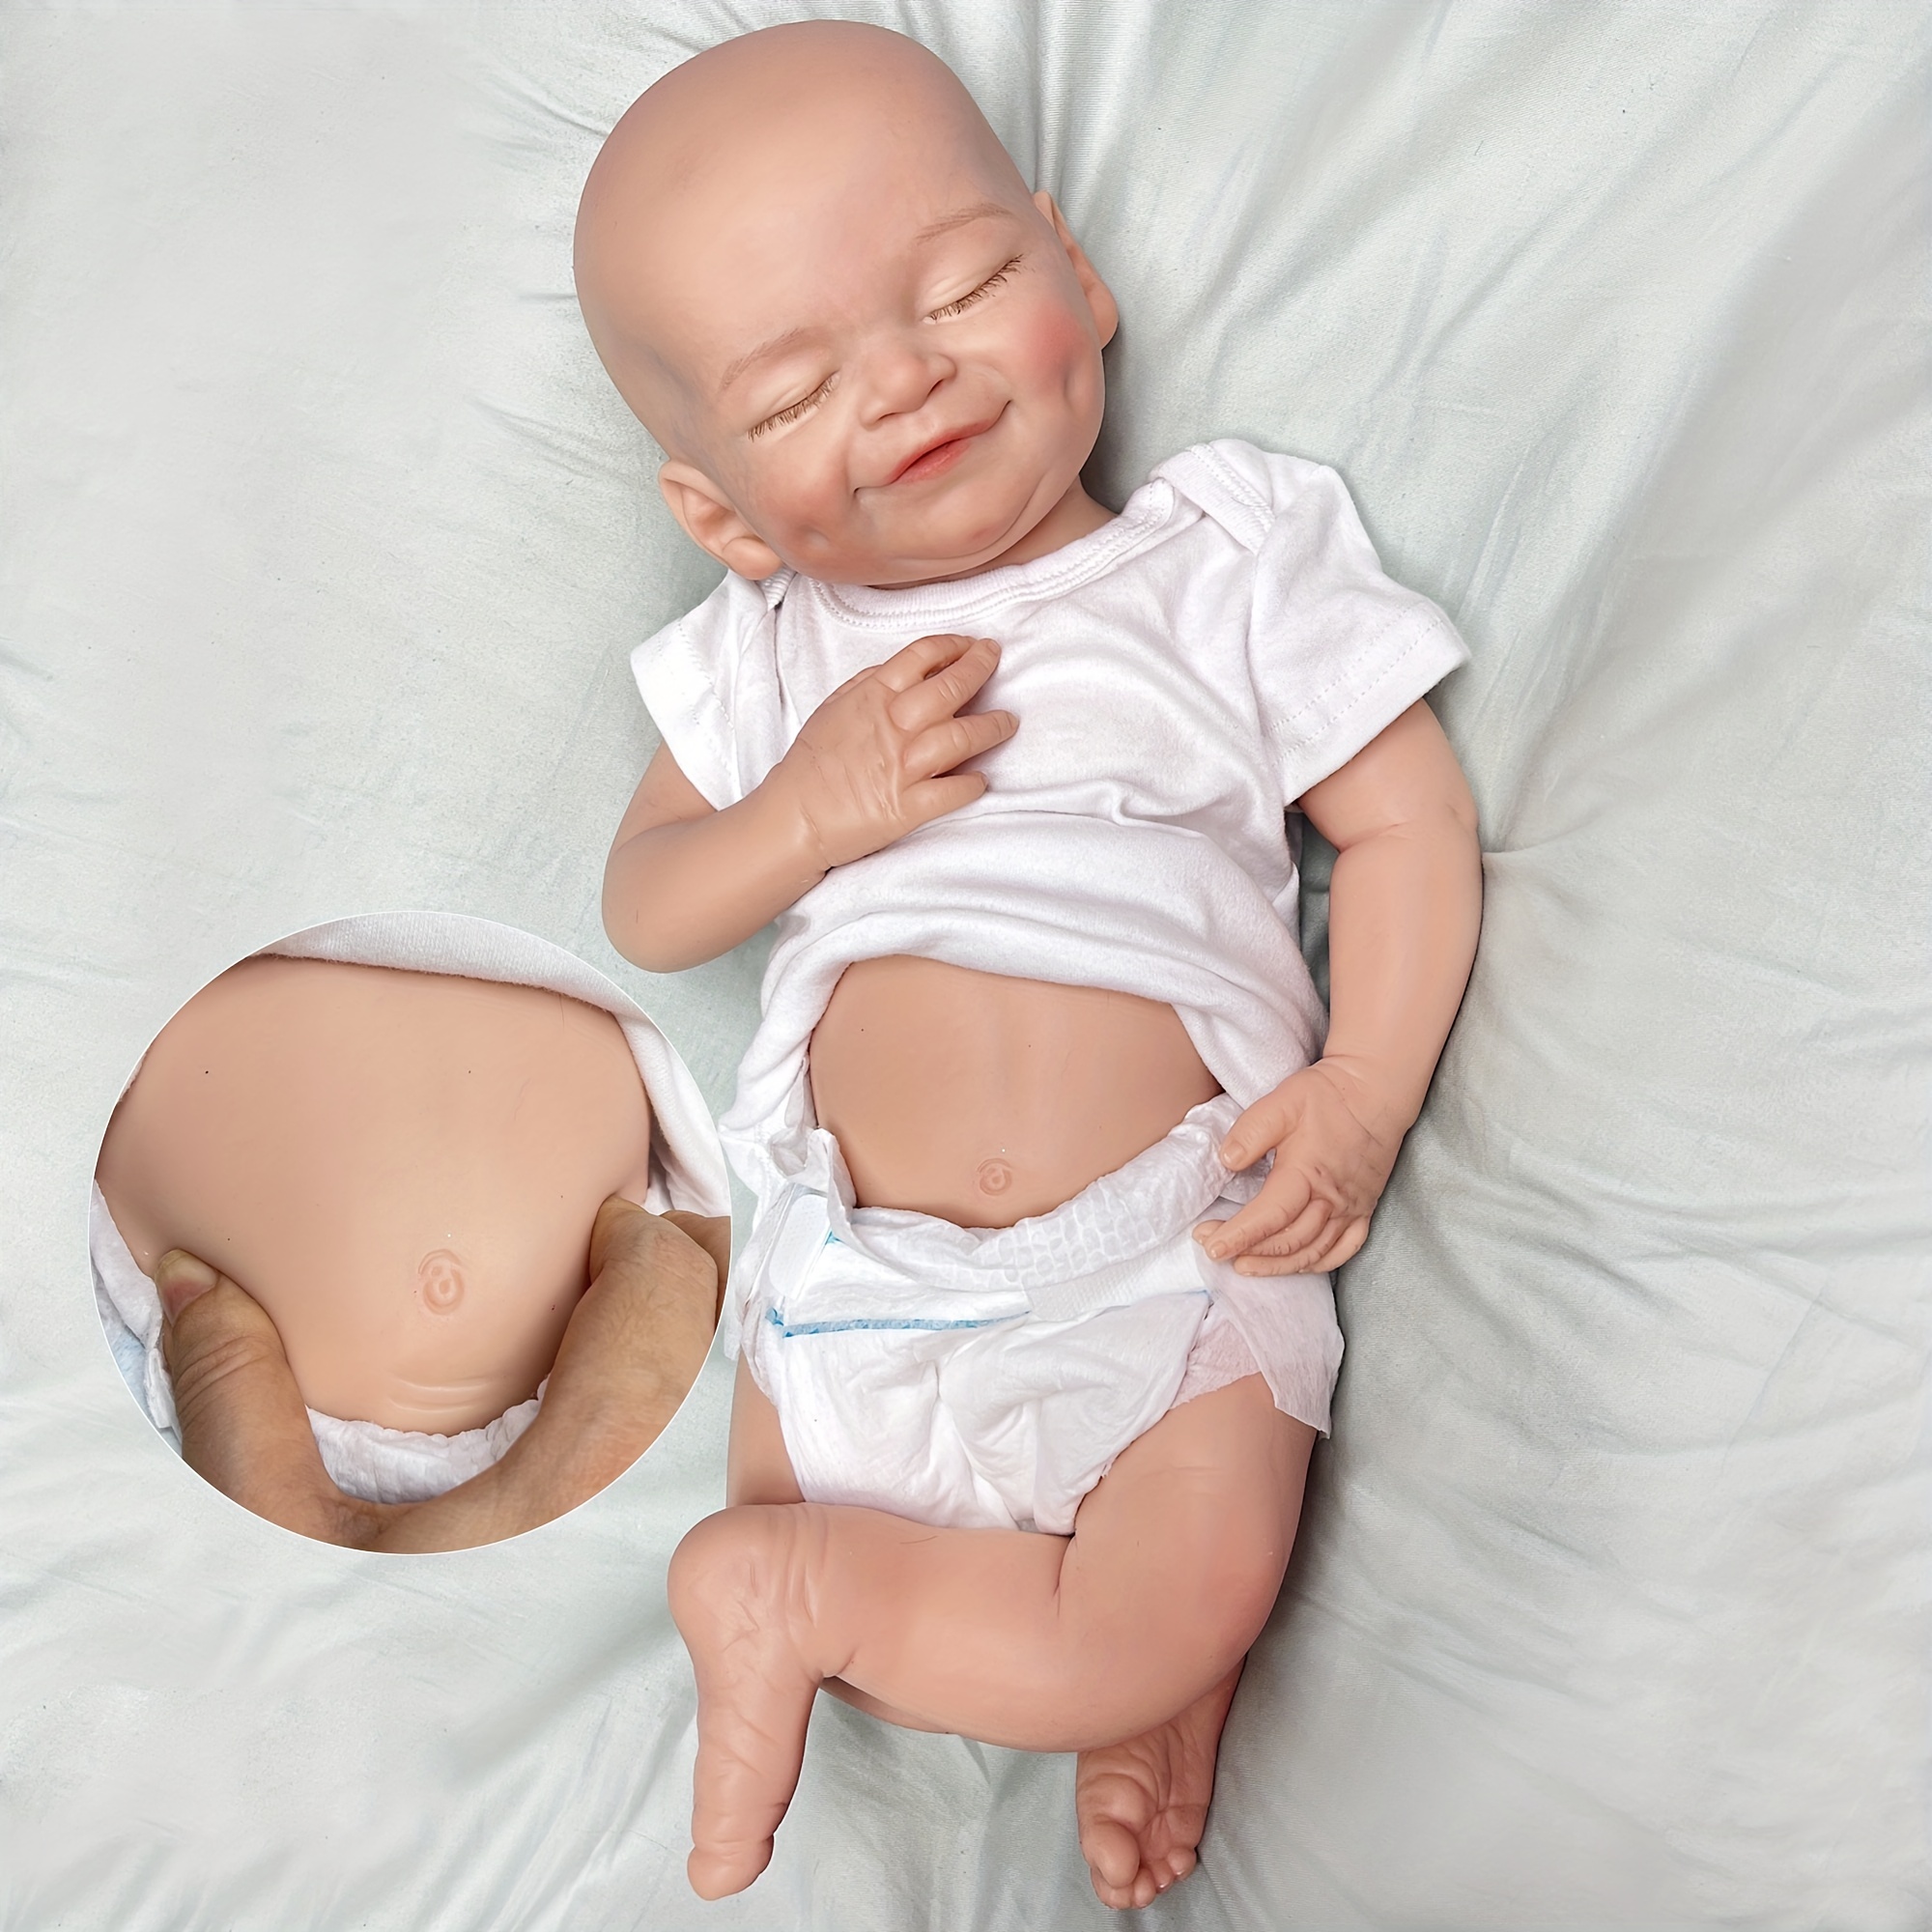 13.5 in Full Body Platinum Silicone Baby Reborn Doll Realistic Alien  Newborn Boy